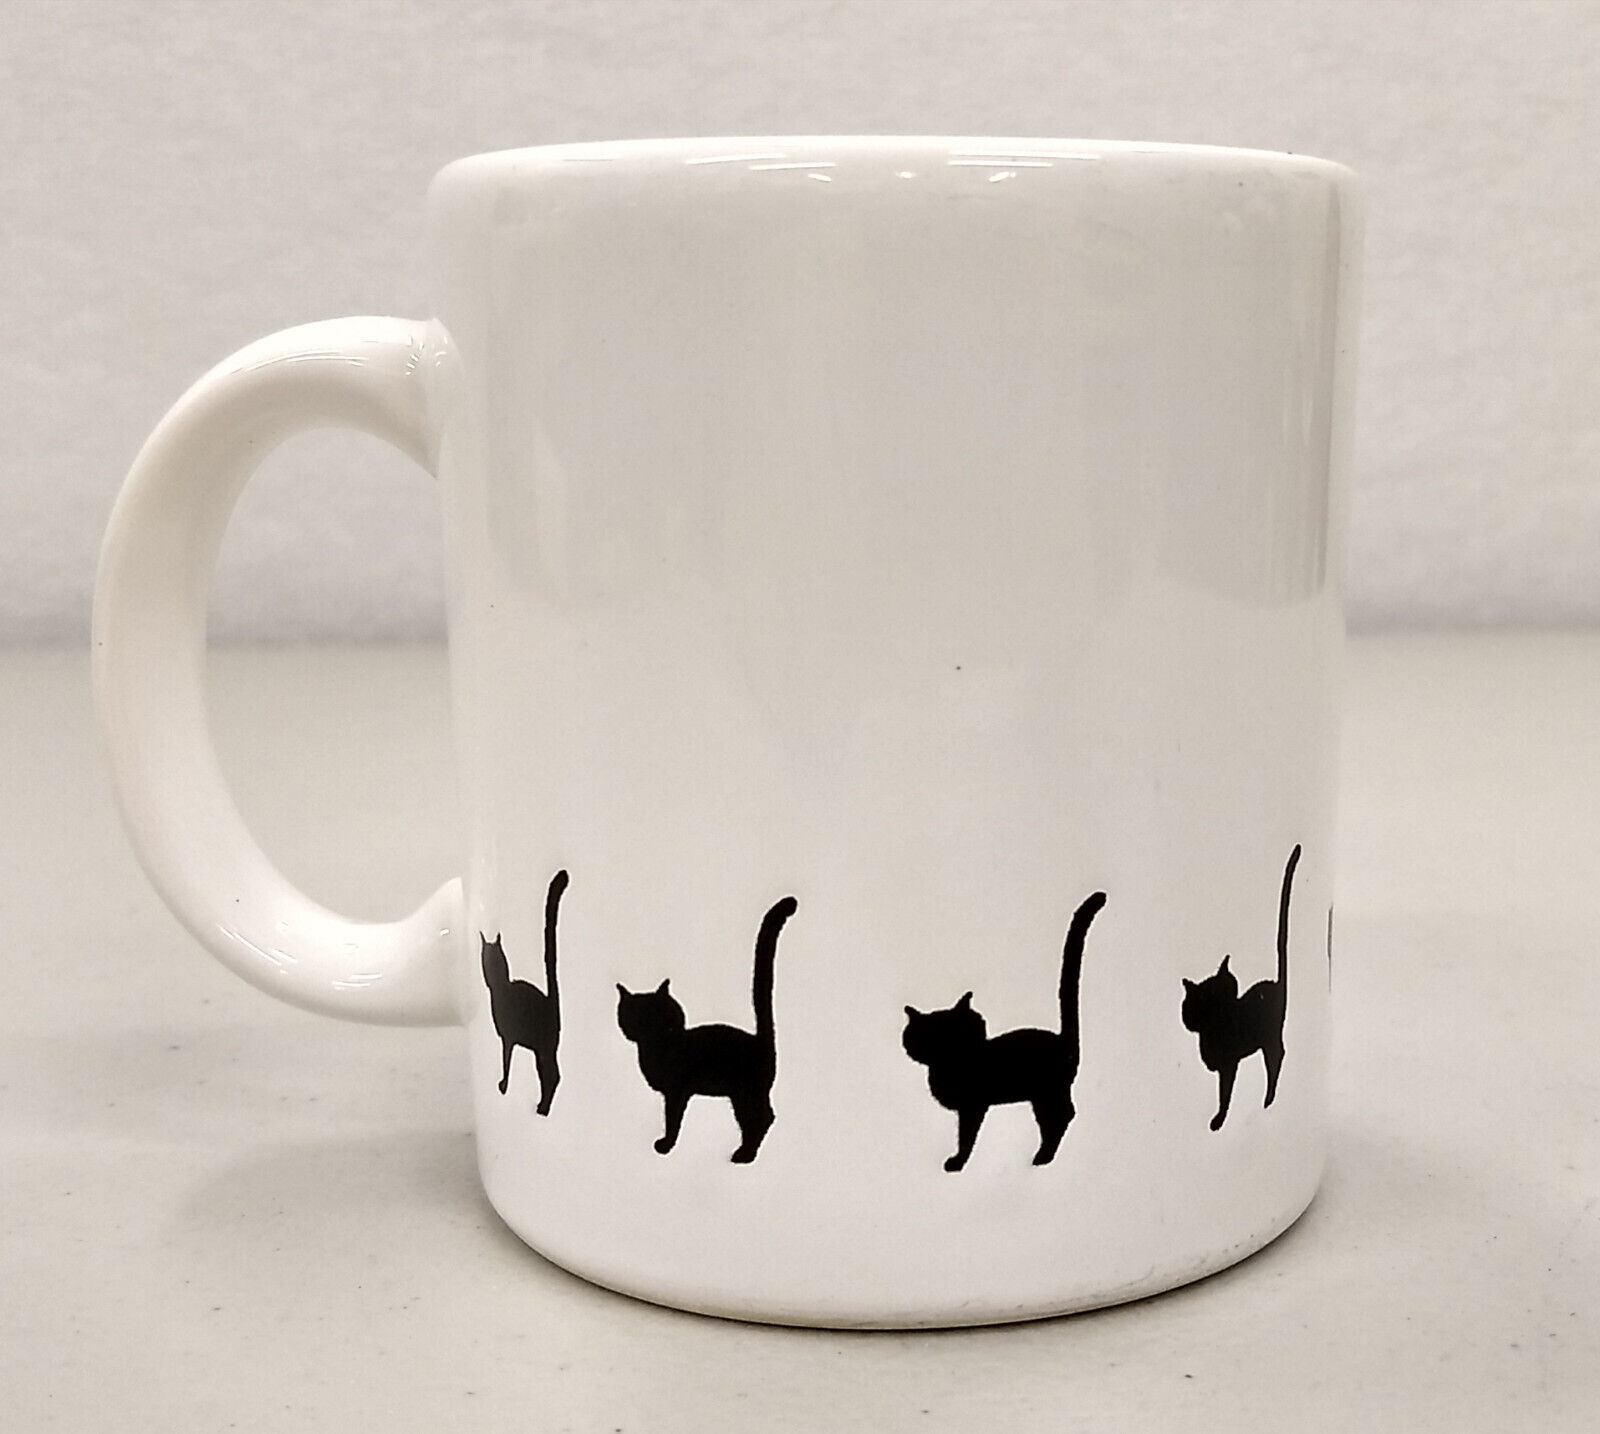 Vintage Waechtersbach Mug ~ BLACK CATS Border ~ Made in Spain ~ Coffee Cup